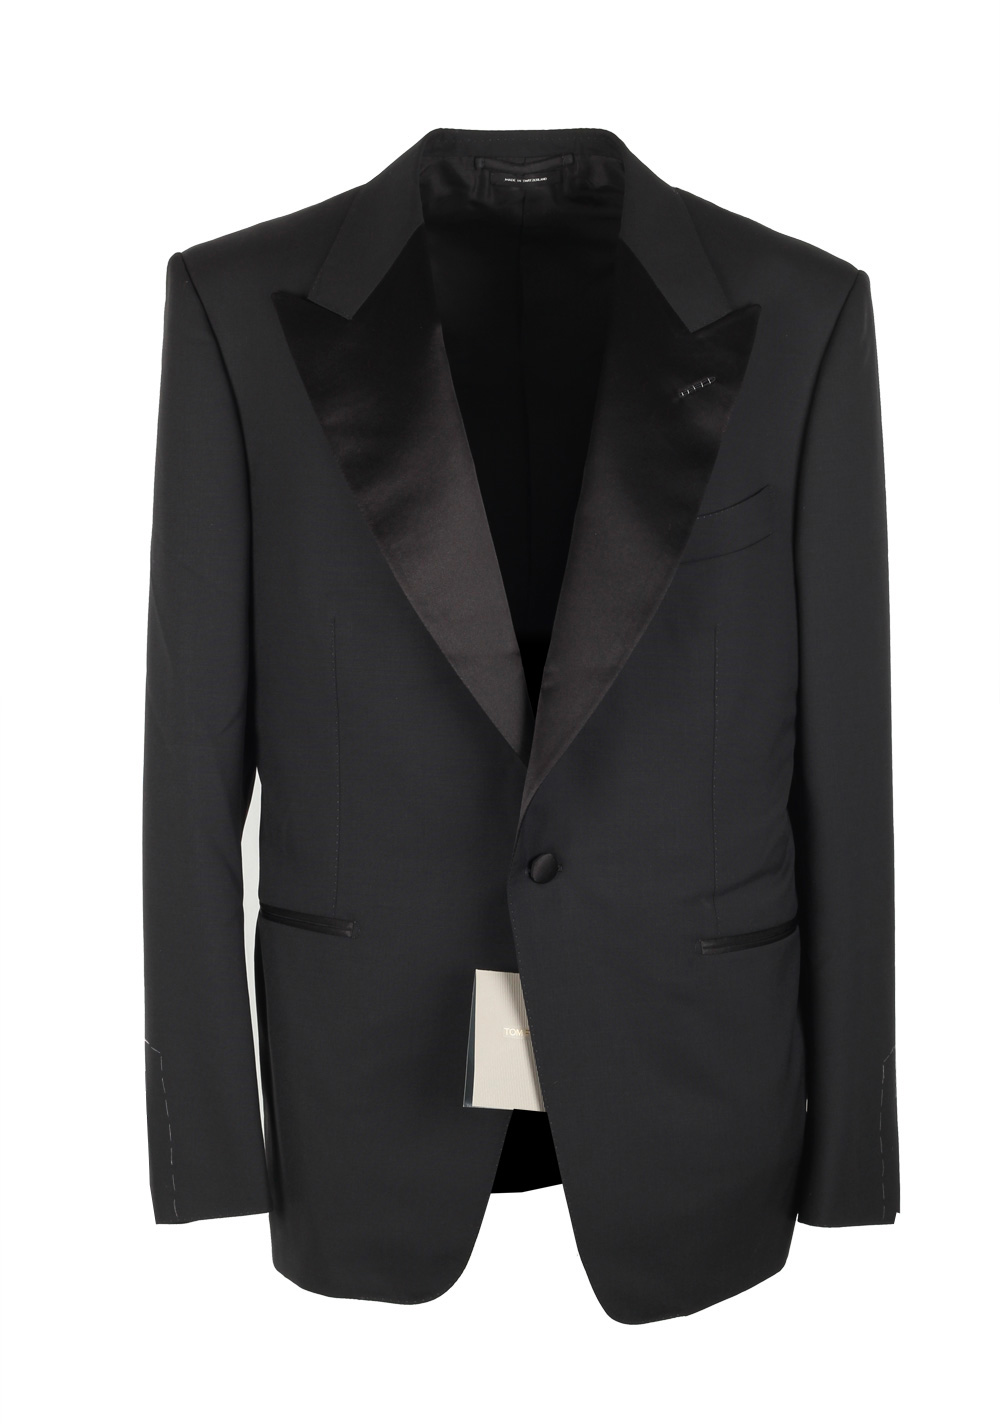 TOM FORD Windsor Black Tuxedo Suit Size 56 / 46R U.S. Fit A | Costume ...